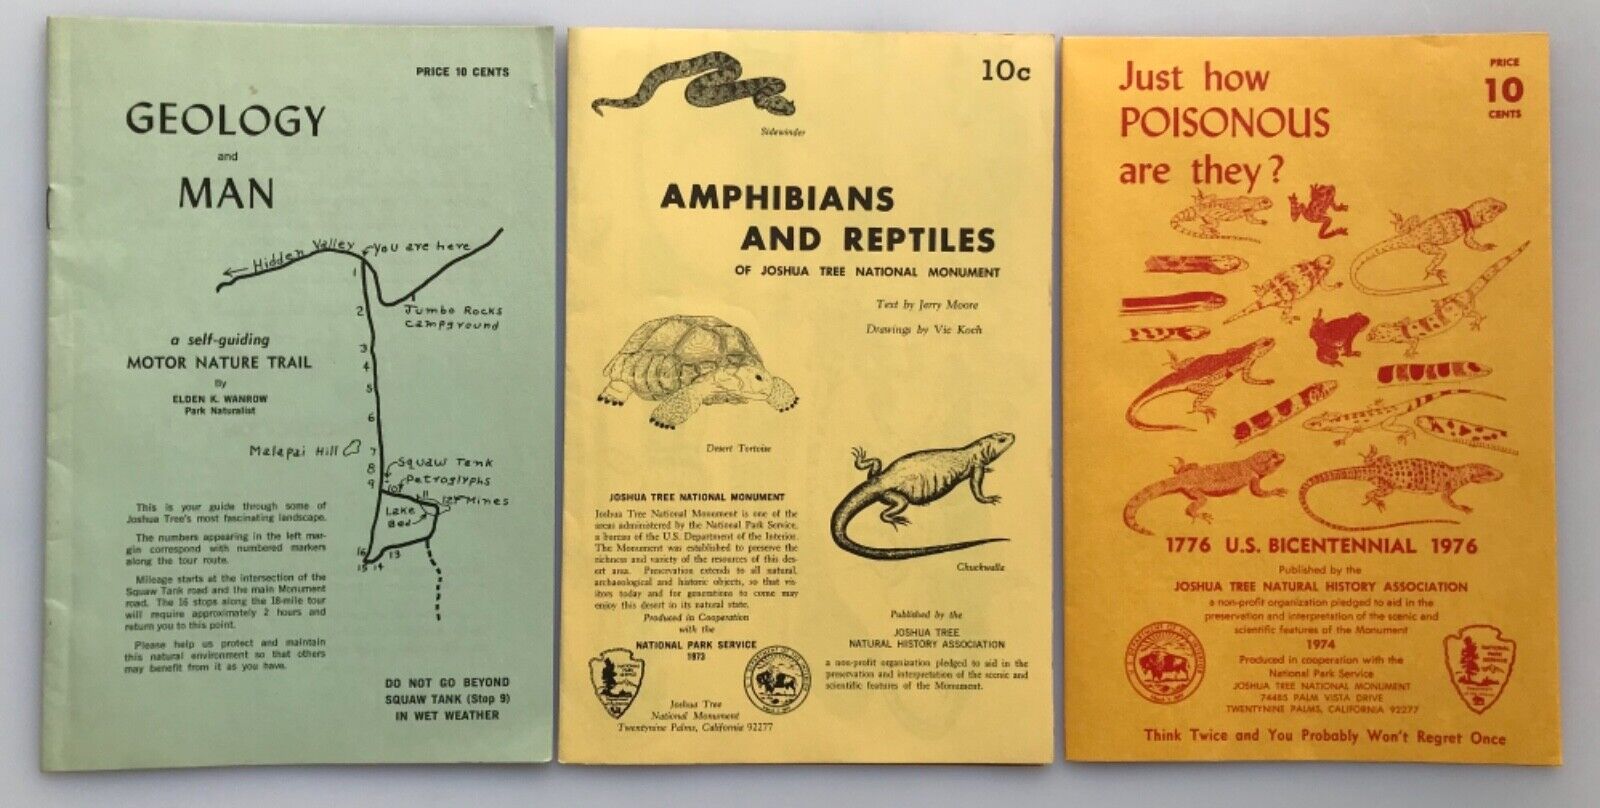 VTG Joshua Tree National Monument Poisonous Amphibians Reptiles Geology Booklets